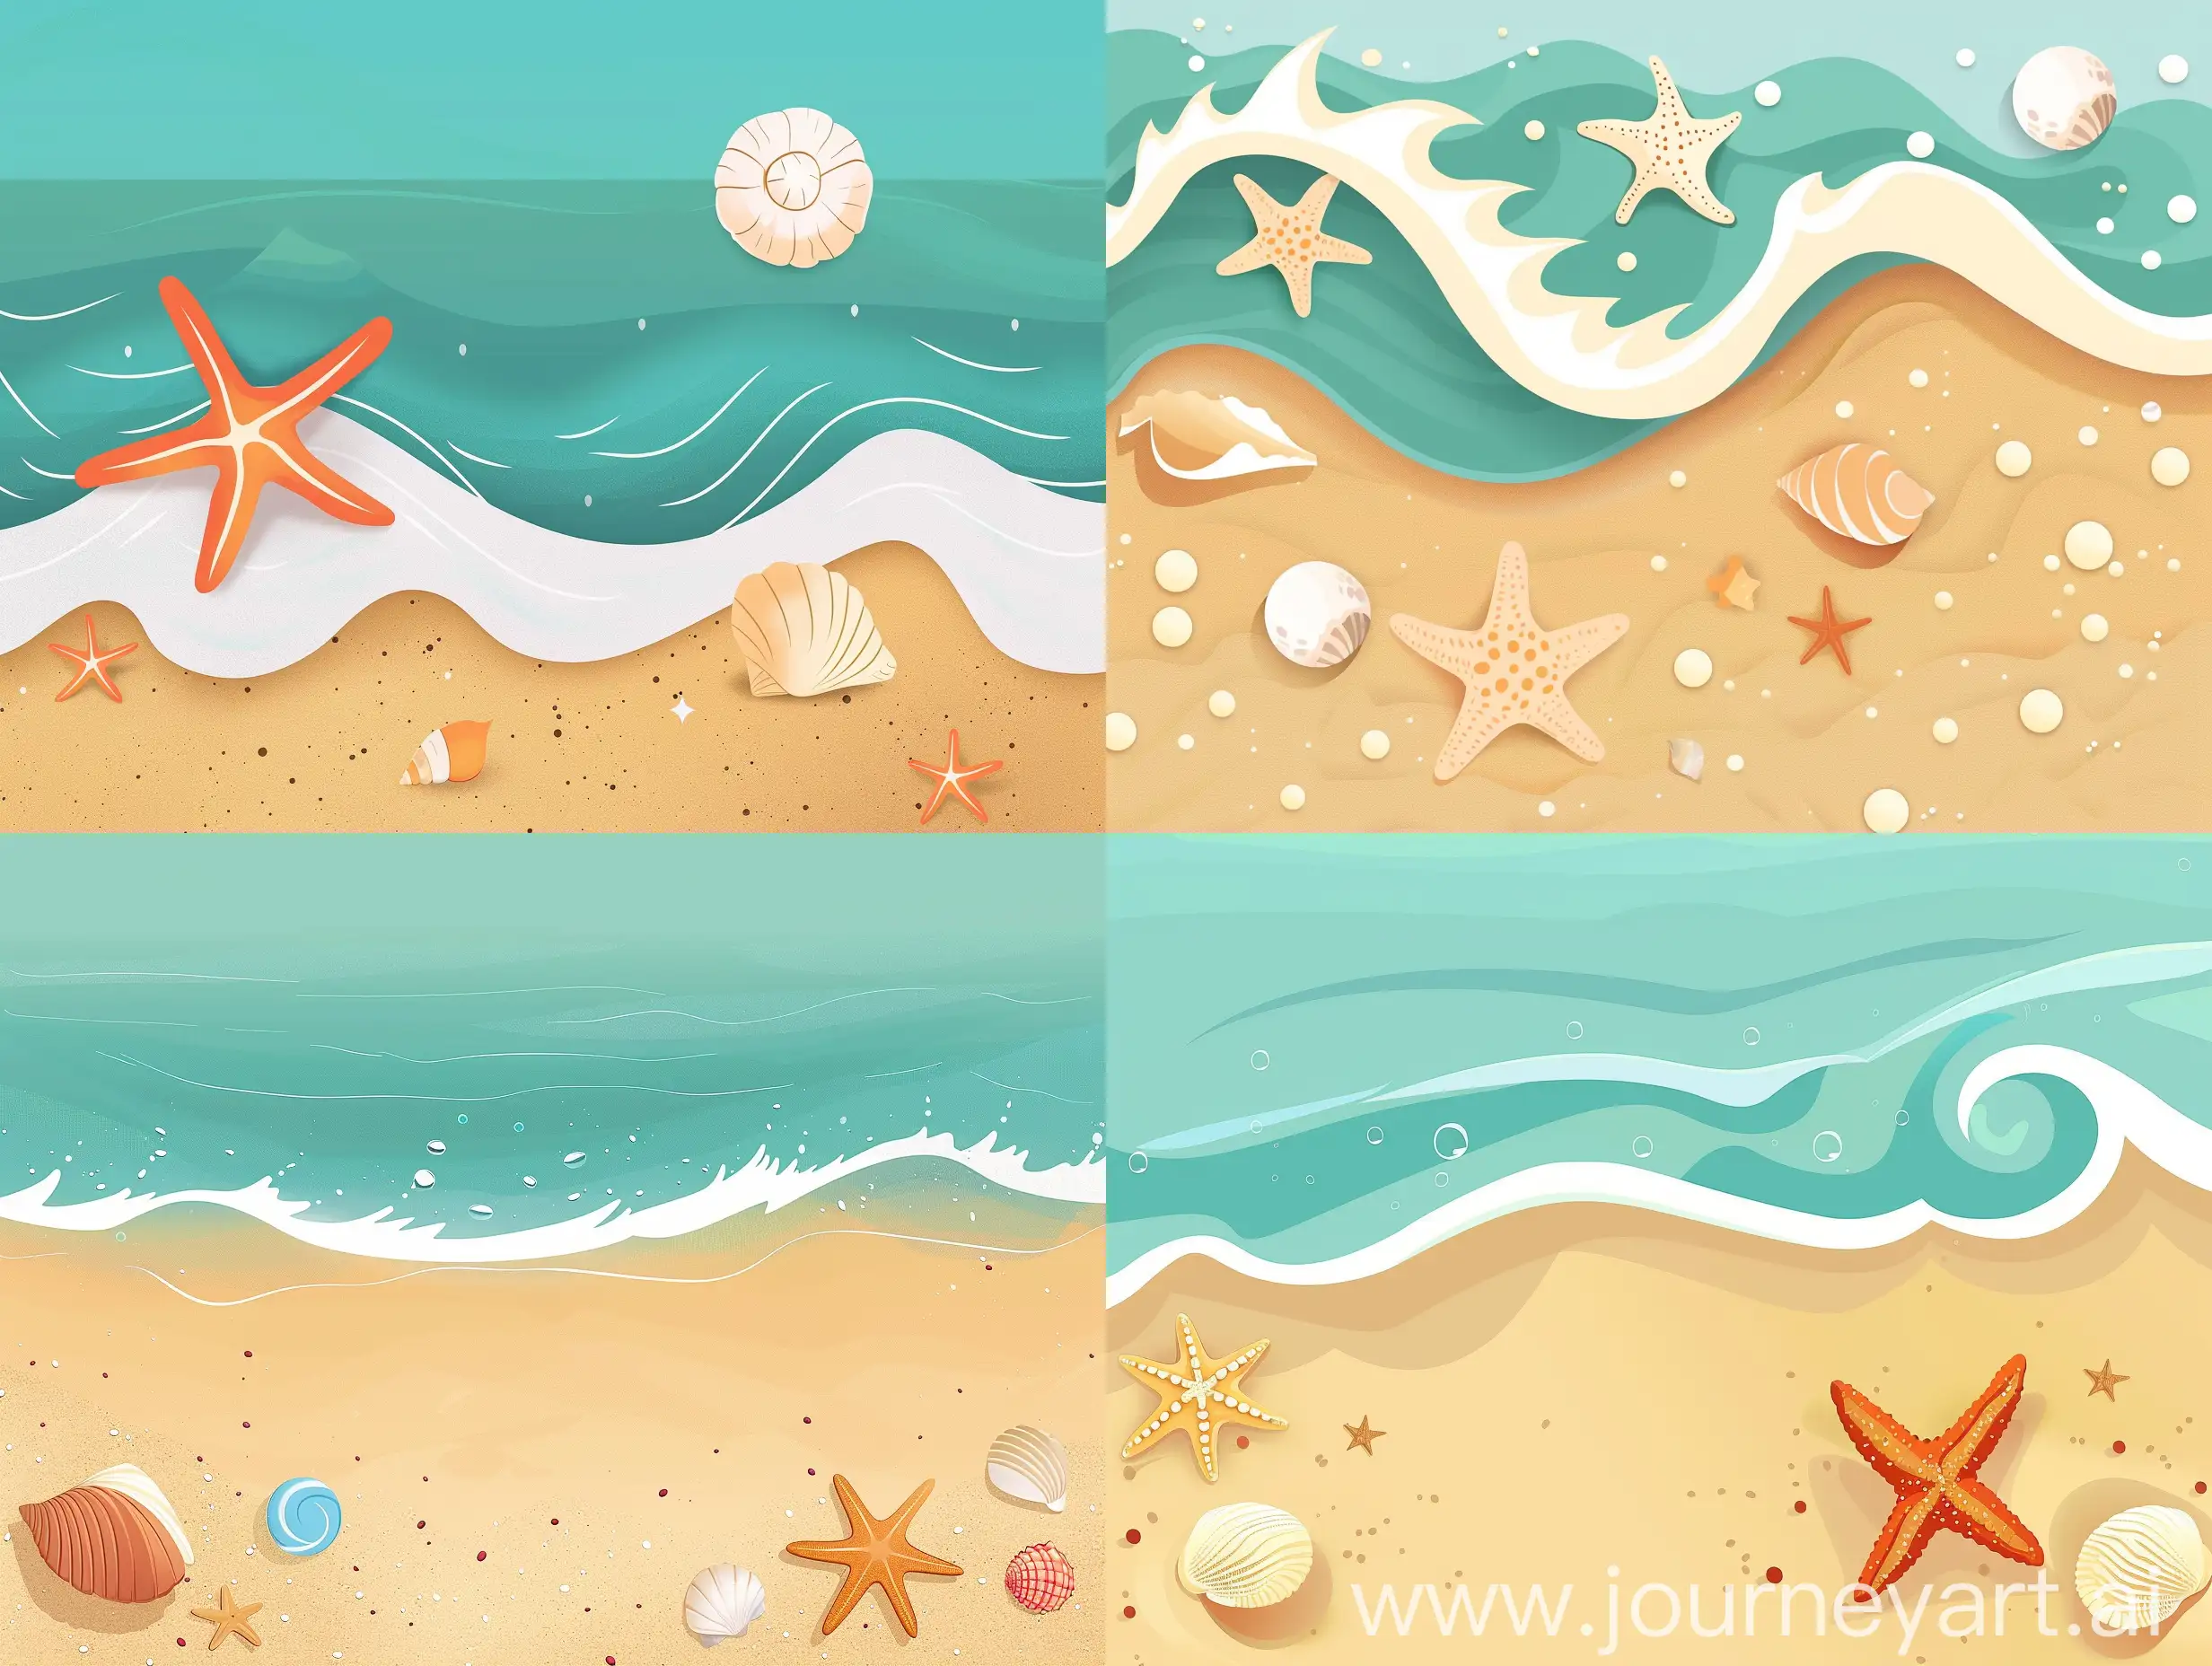 Minimalist-Ocean-Wave-Scene-with-Beach-Balls-and-Seashells